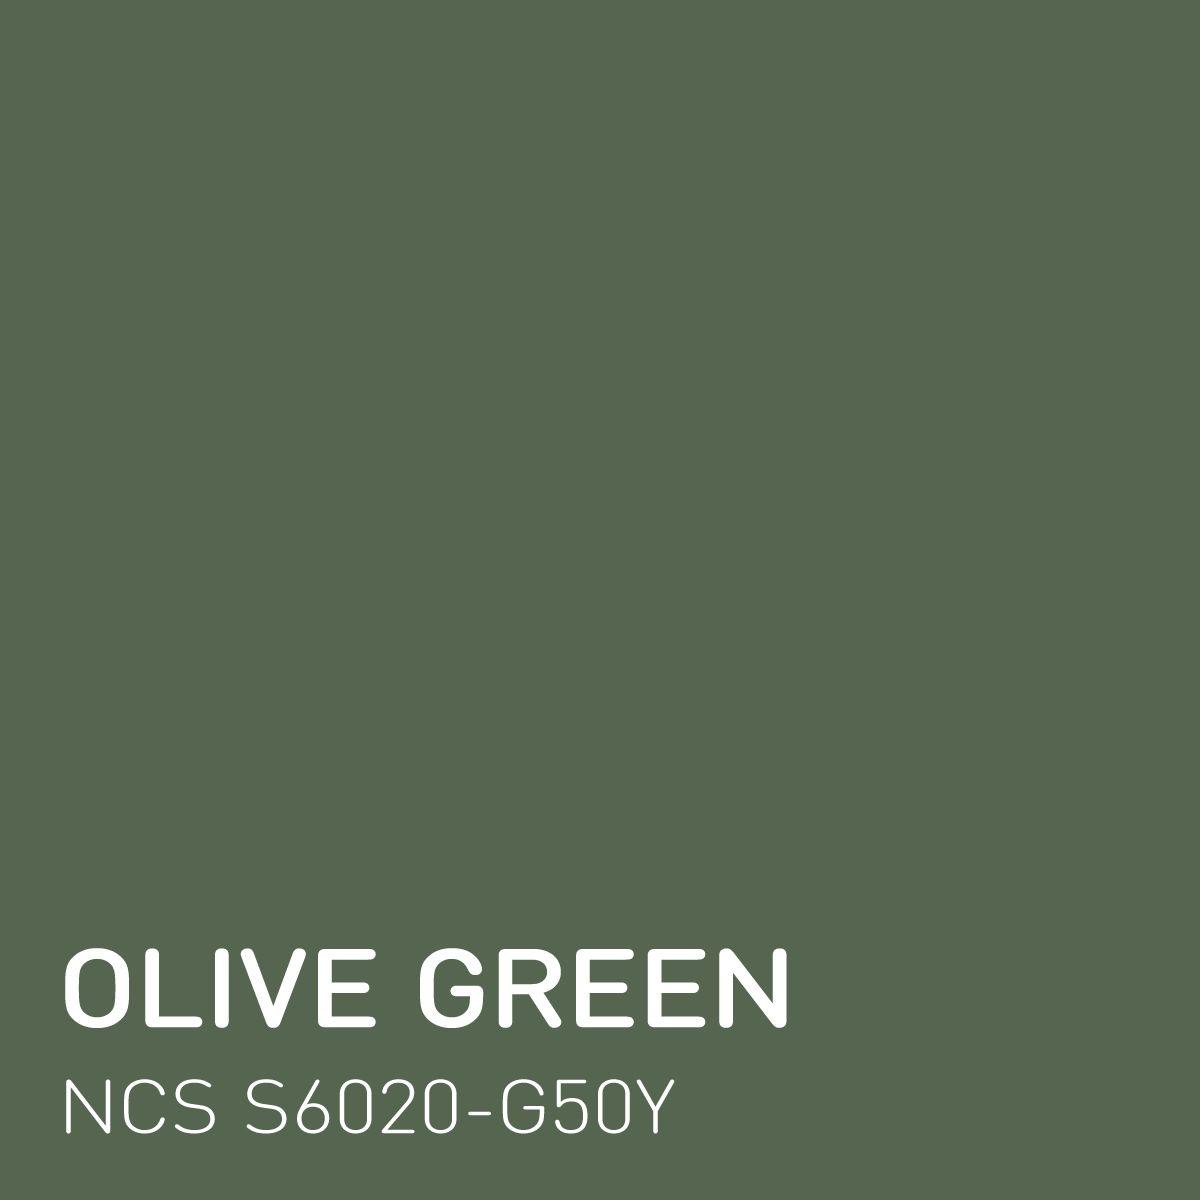 Olive Green and White Logo - LogoDix